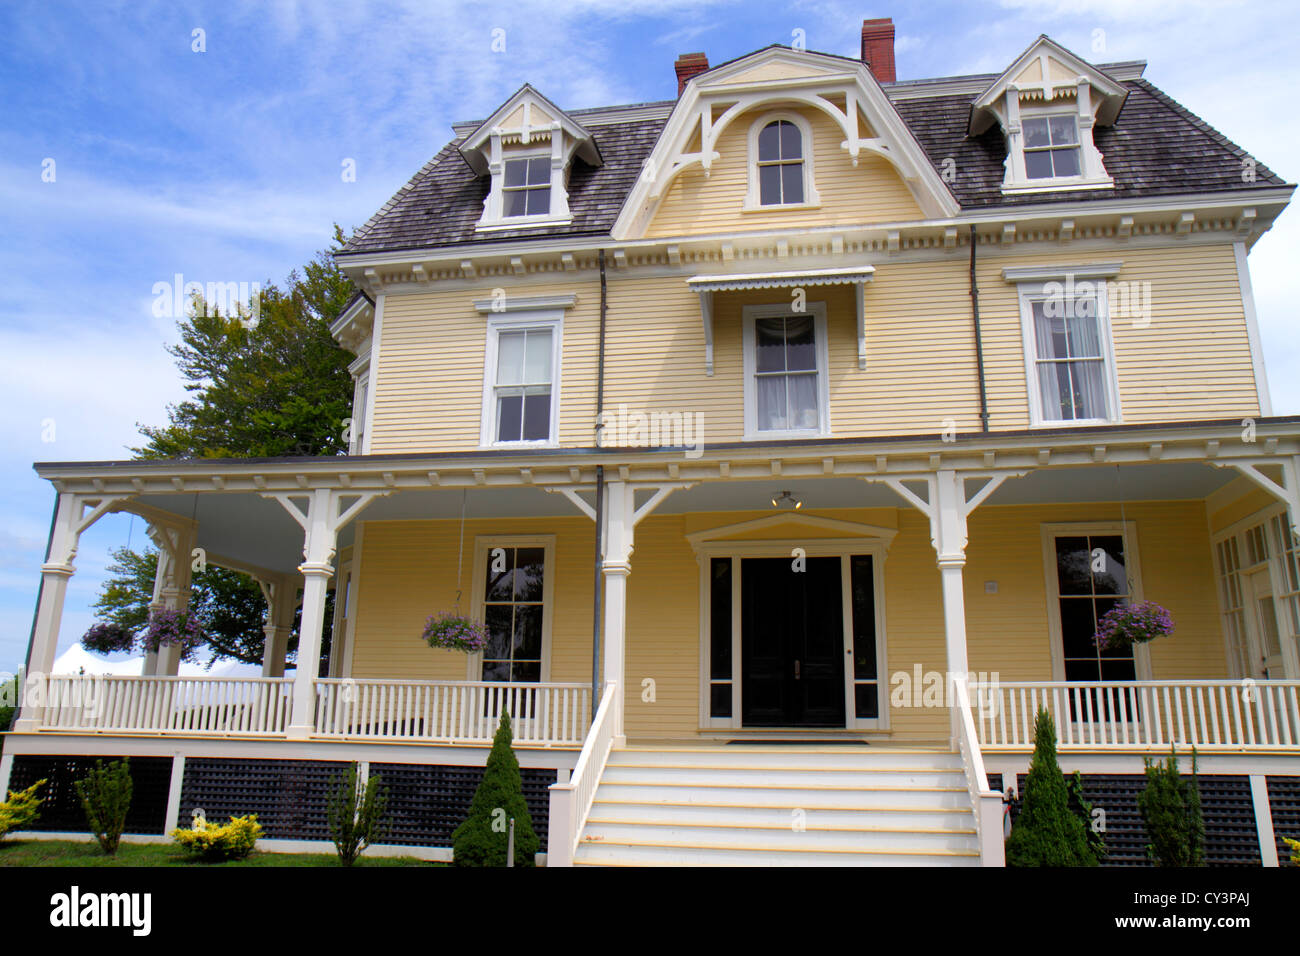 Rhode Island, Newport, Fort ft. Adams state Park, Eisenhower House, Summer White House, RI120820014 Foto Stock